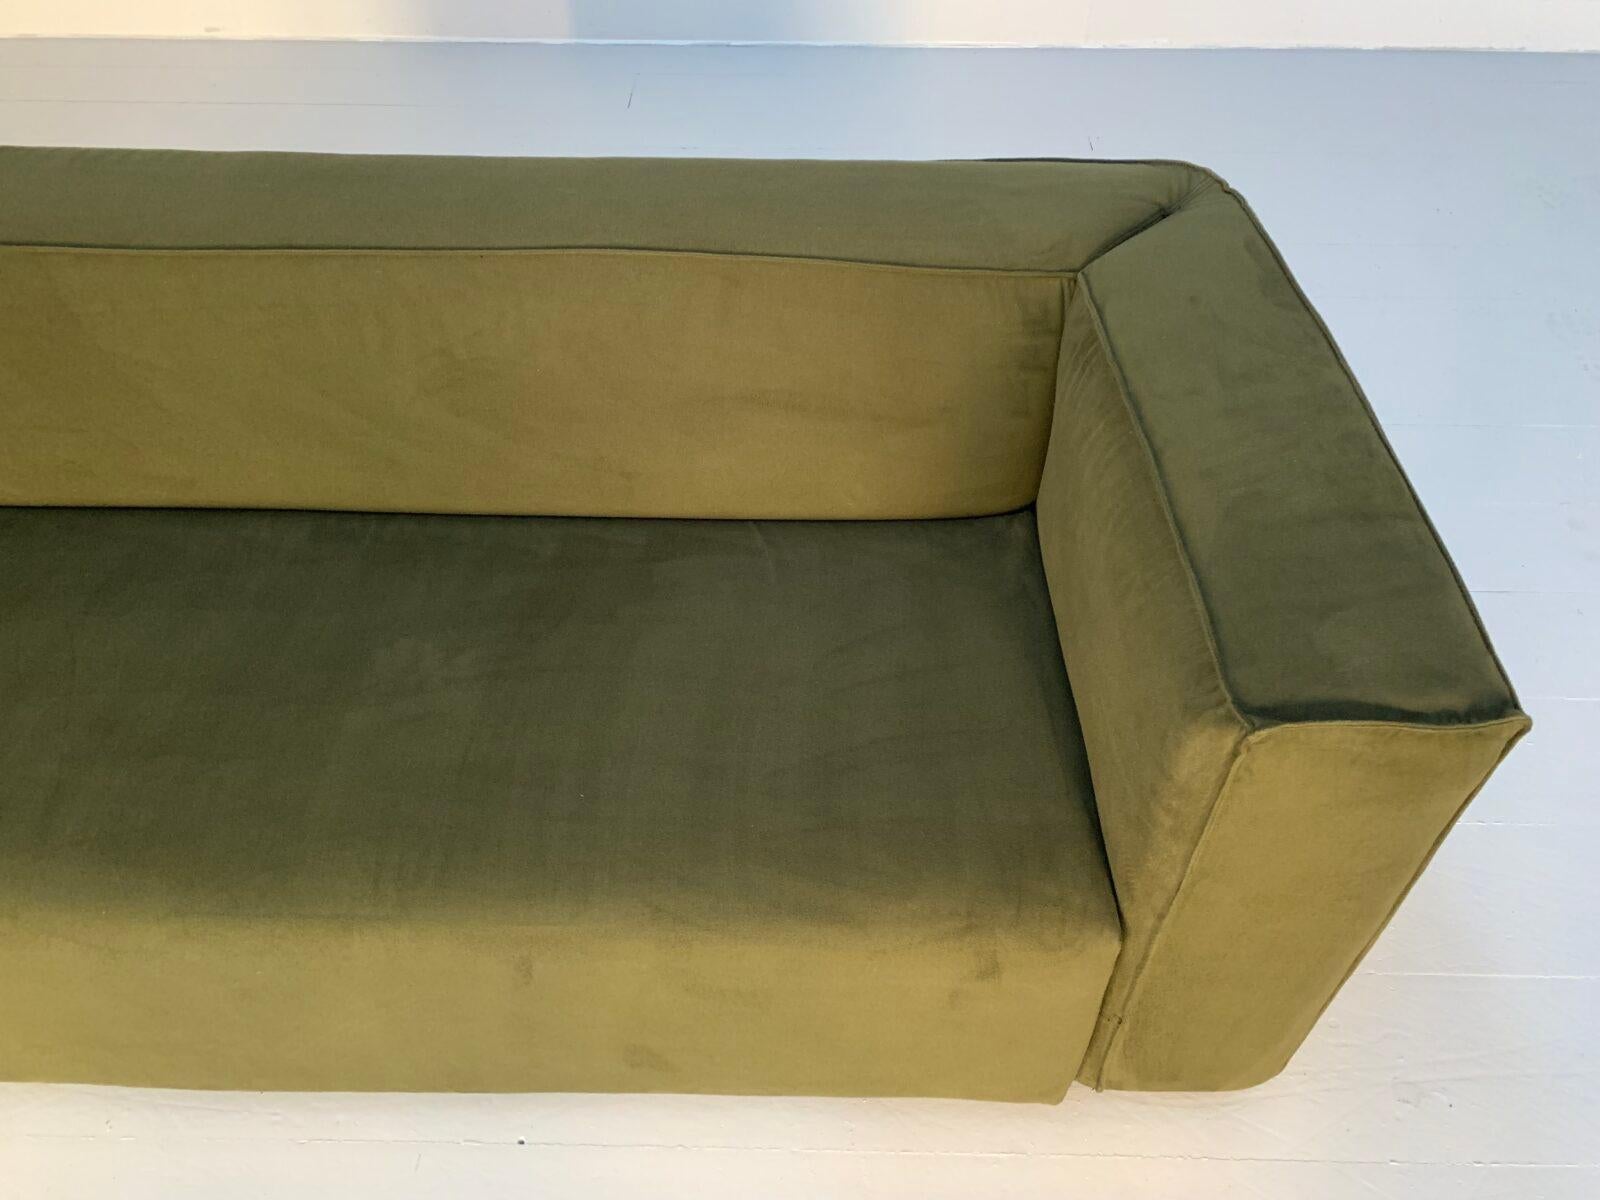 Cassina “180 Blox” 2.5 Seat Sofa – in Green Moleskin In Good Condition For Sale In Barrowford, GB